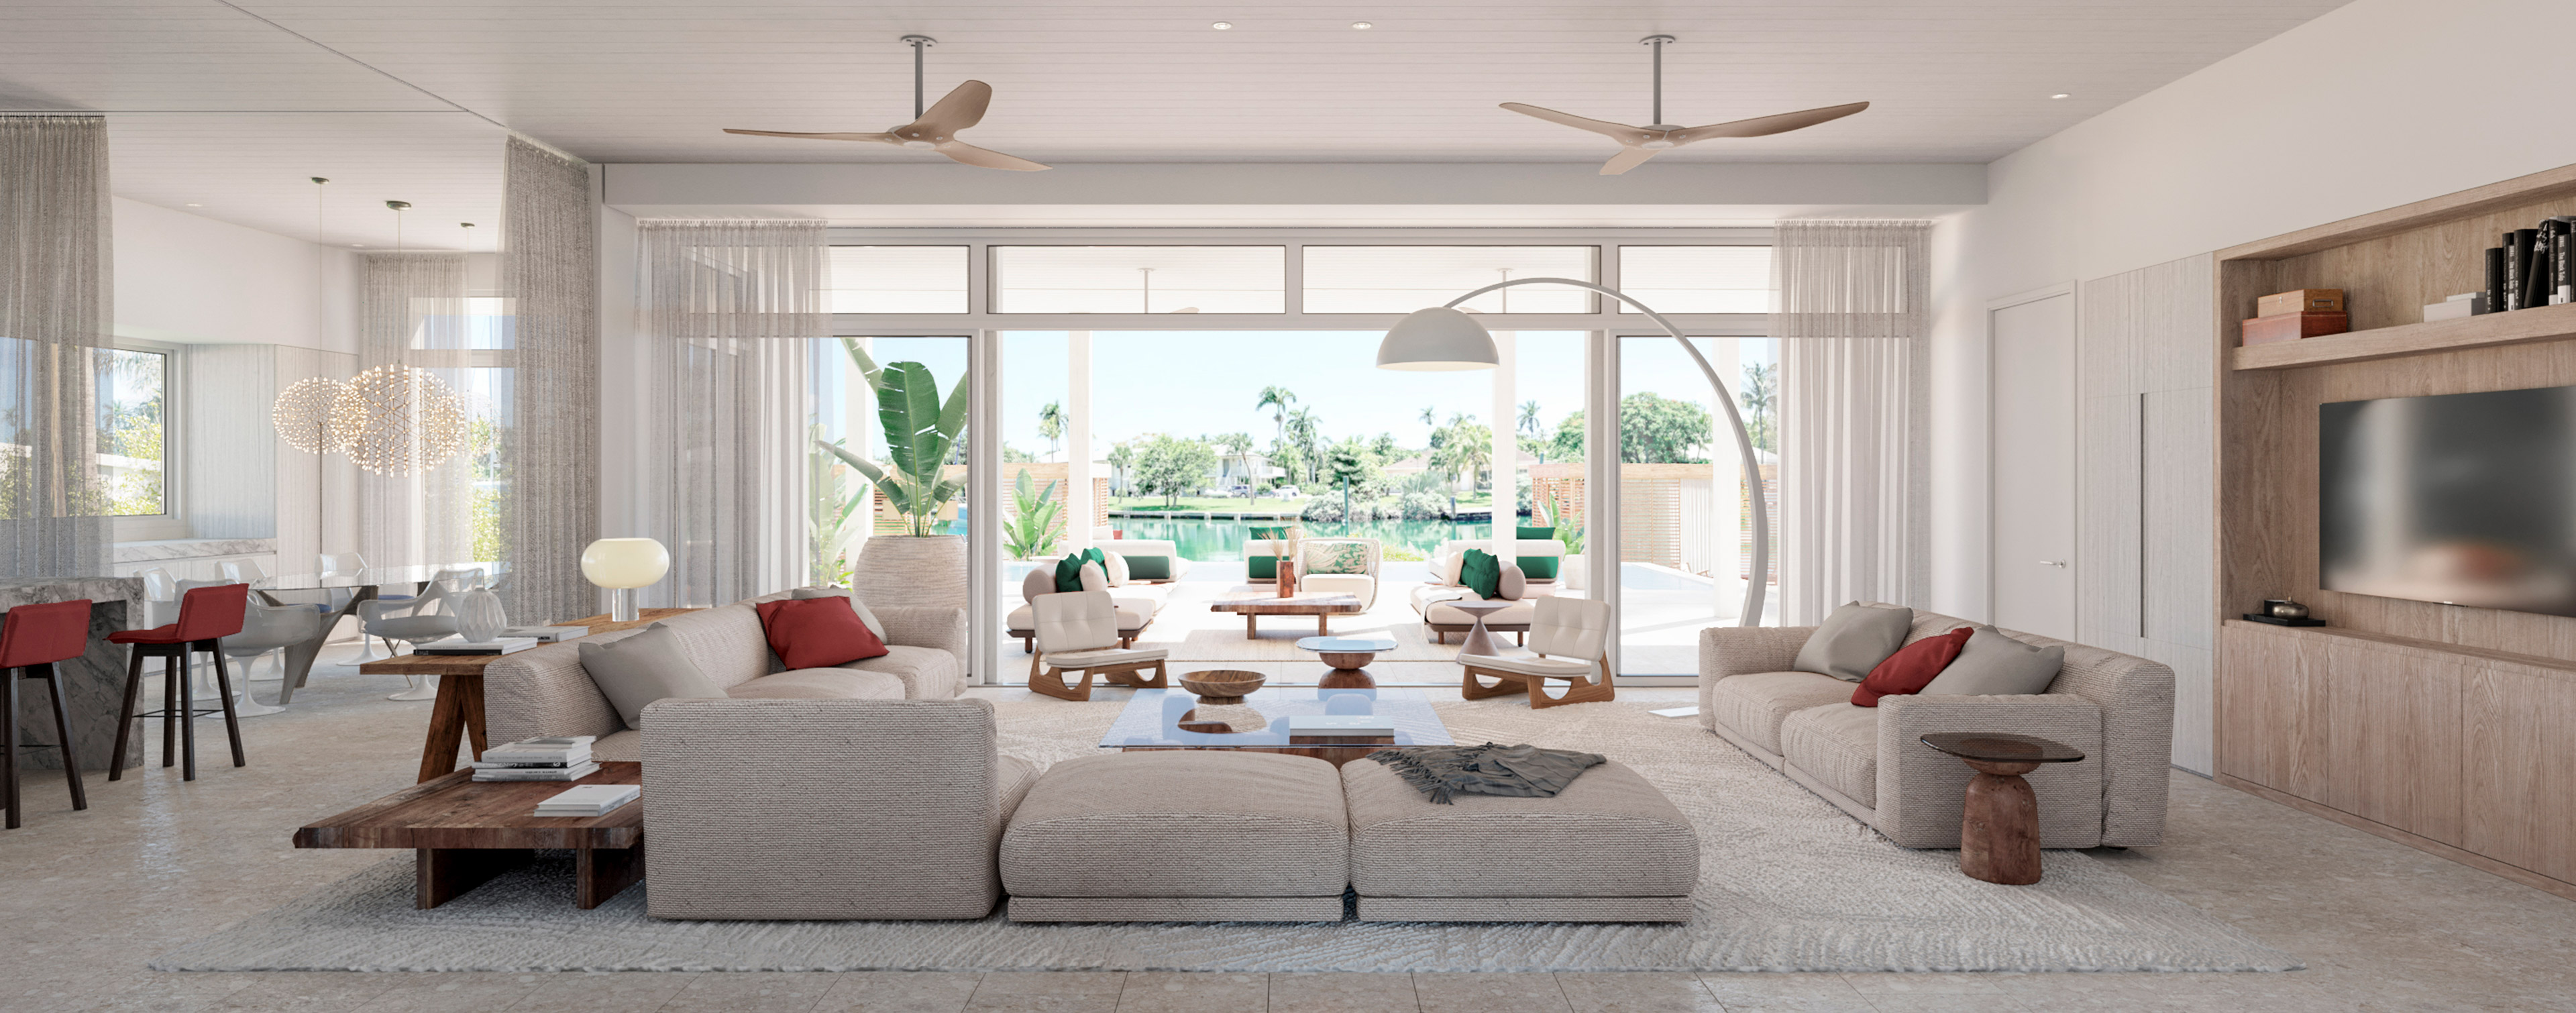 luv studio luxury architects bahamas lyford cay villa IMG 02 - Lyford Cay Villa